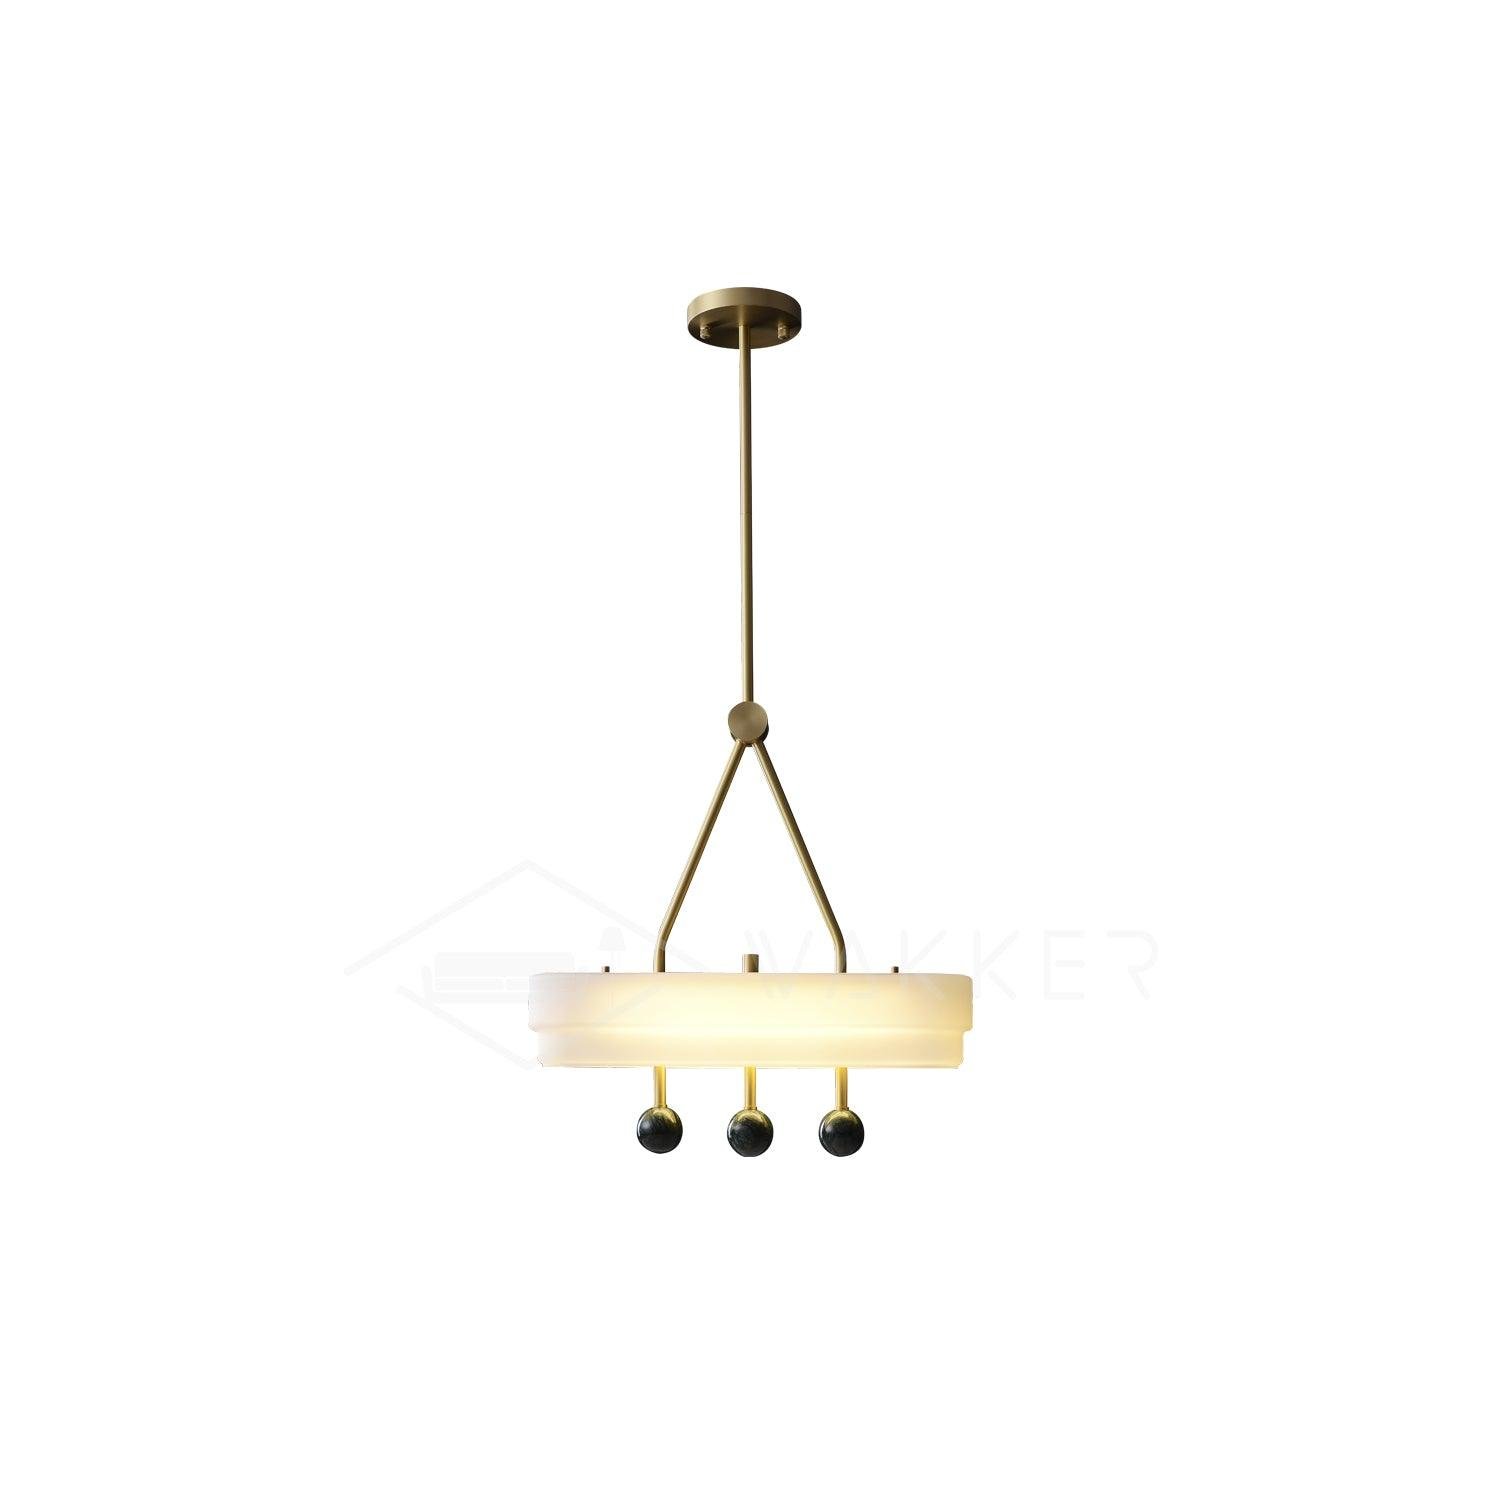 1-Head Spate Pendant Lamp: Dimensions ∅ 17.3″ x H 17.7″ (Dia 44cm x H 45cm), Cool White.